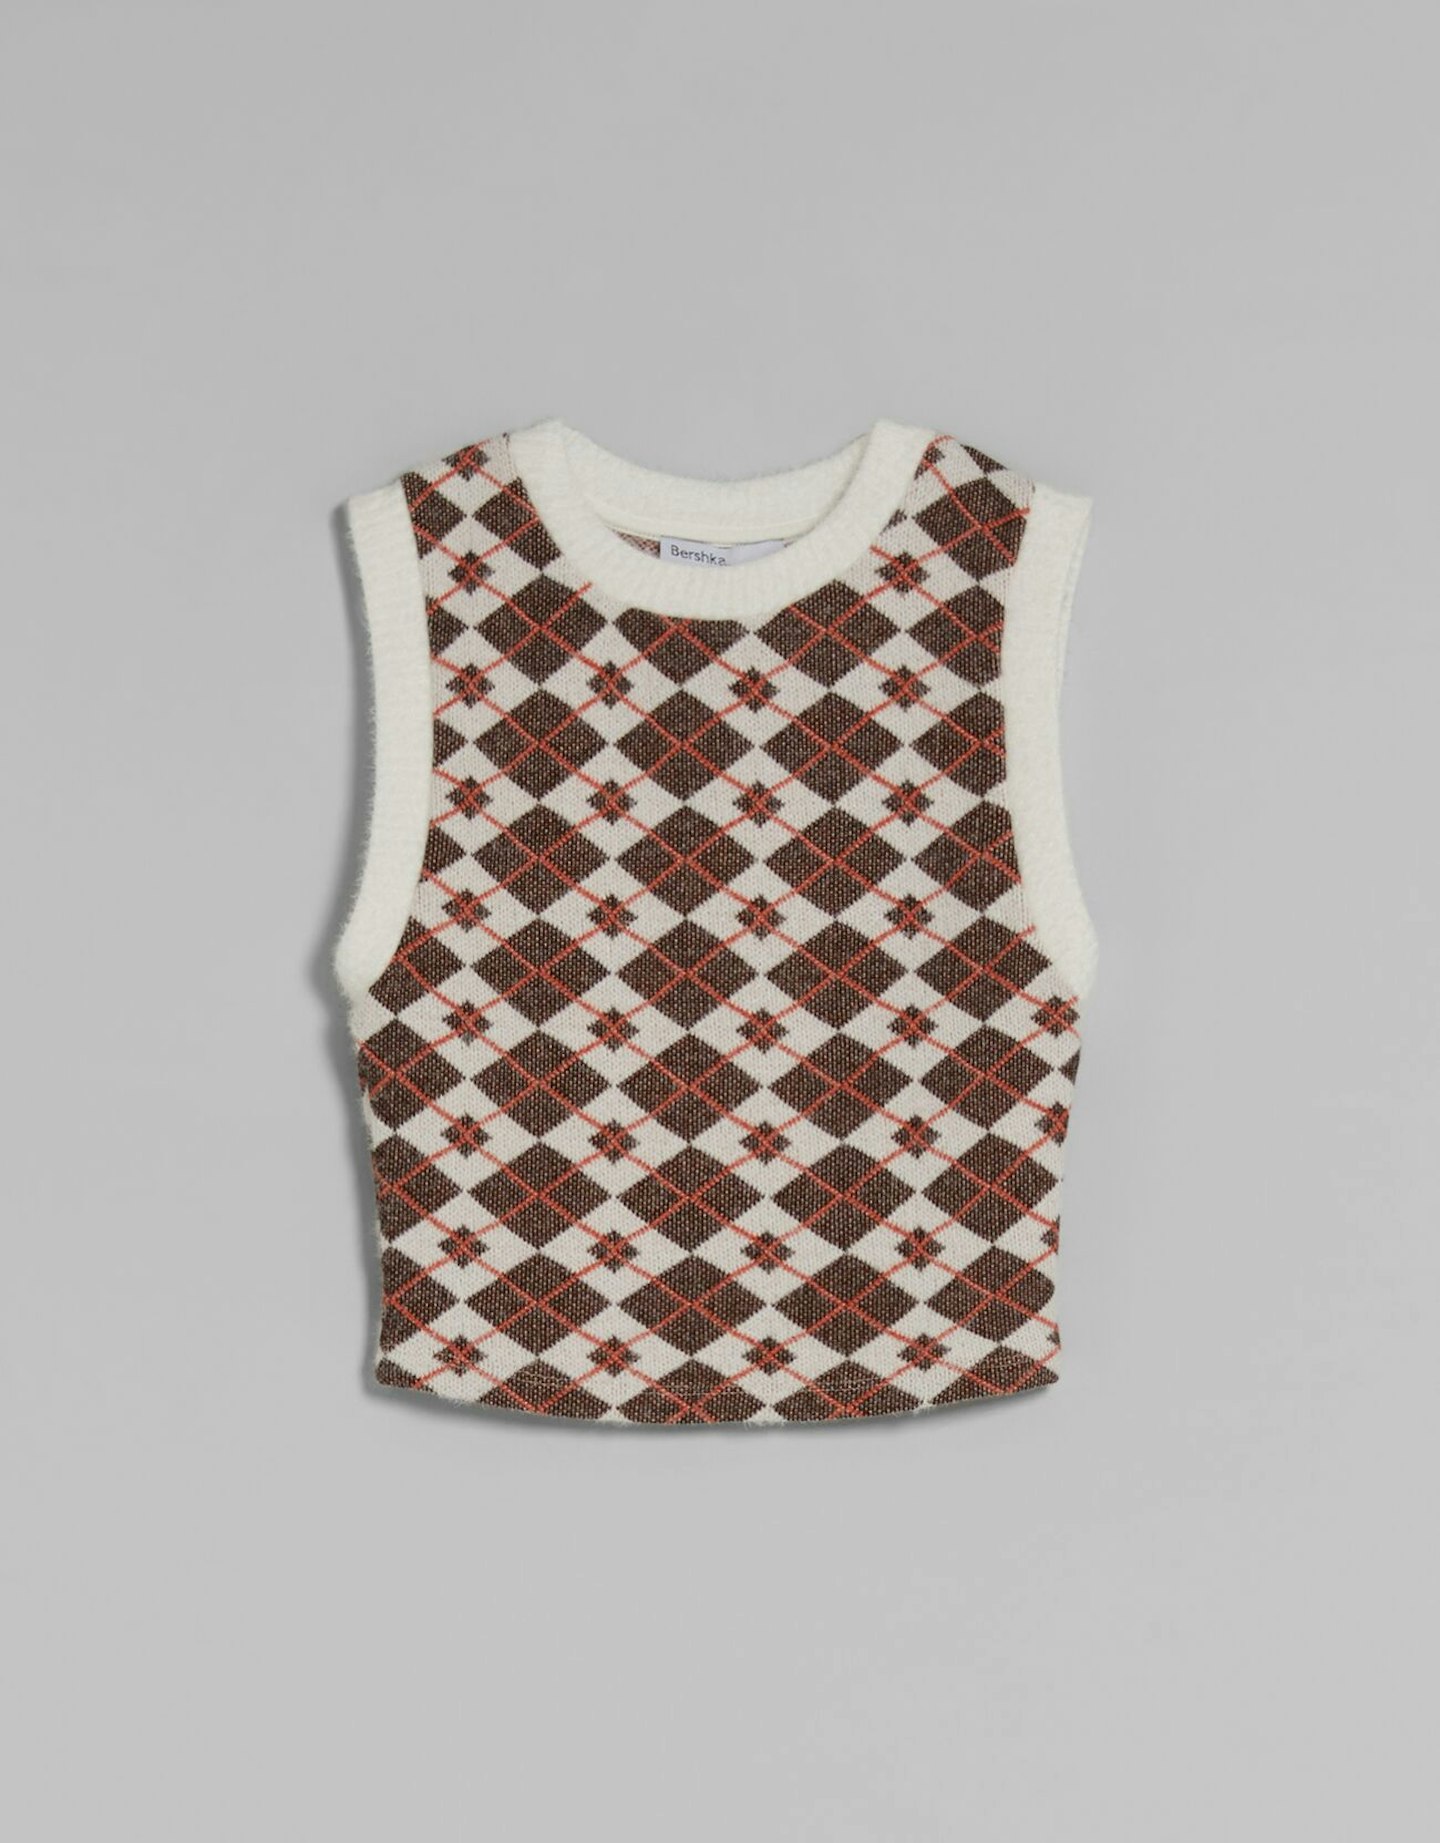 Bershka, Fuzzy round neck sweater vest, £17.99